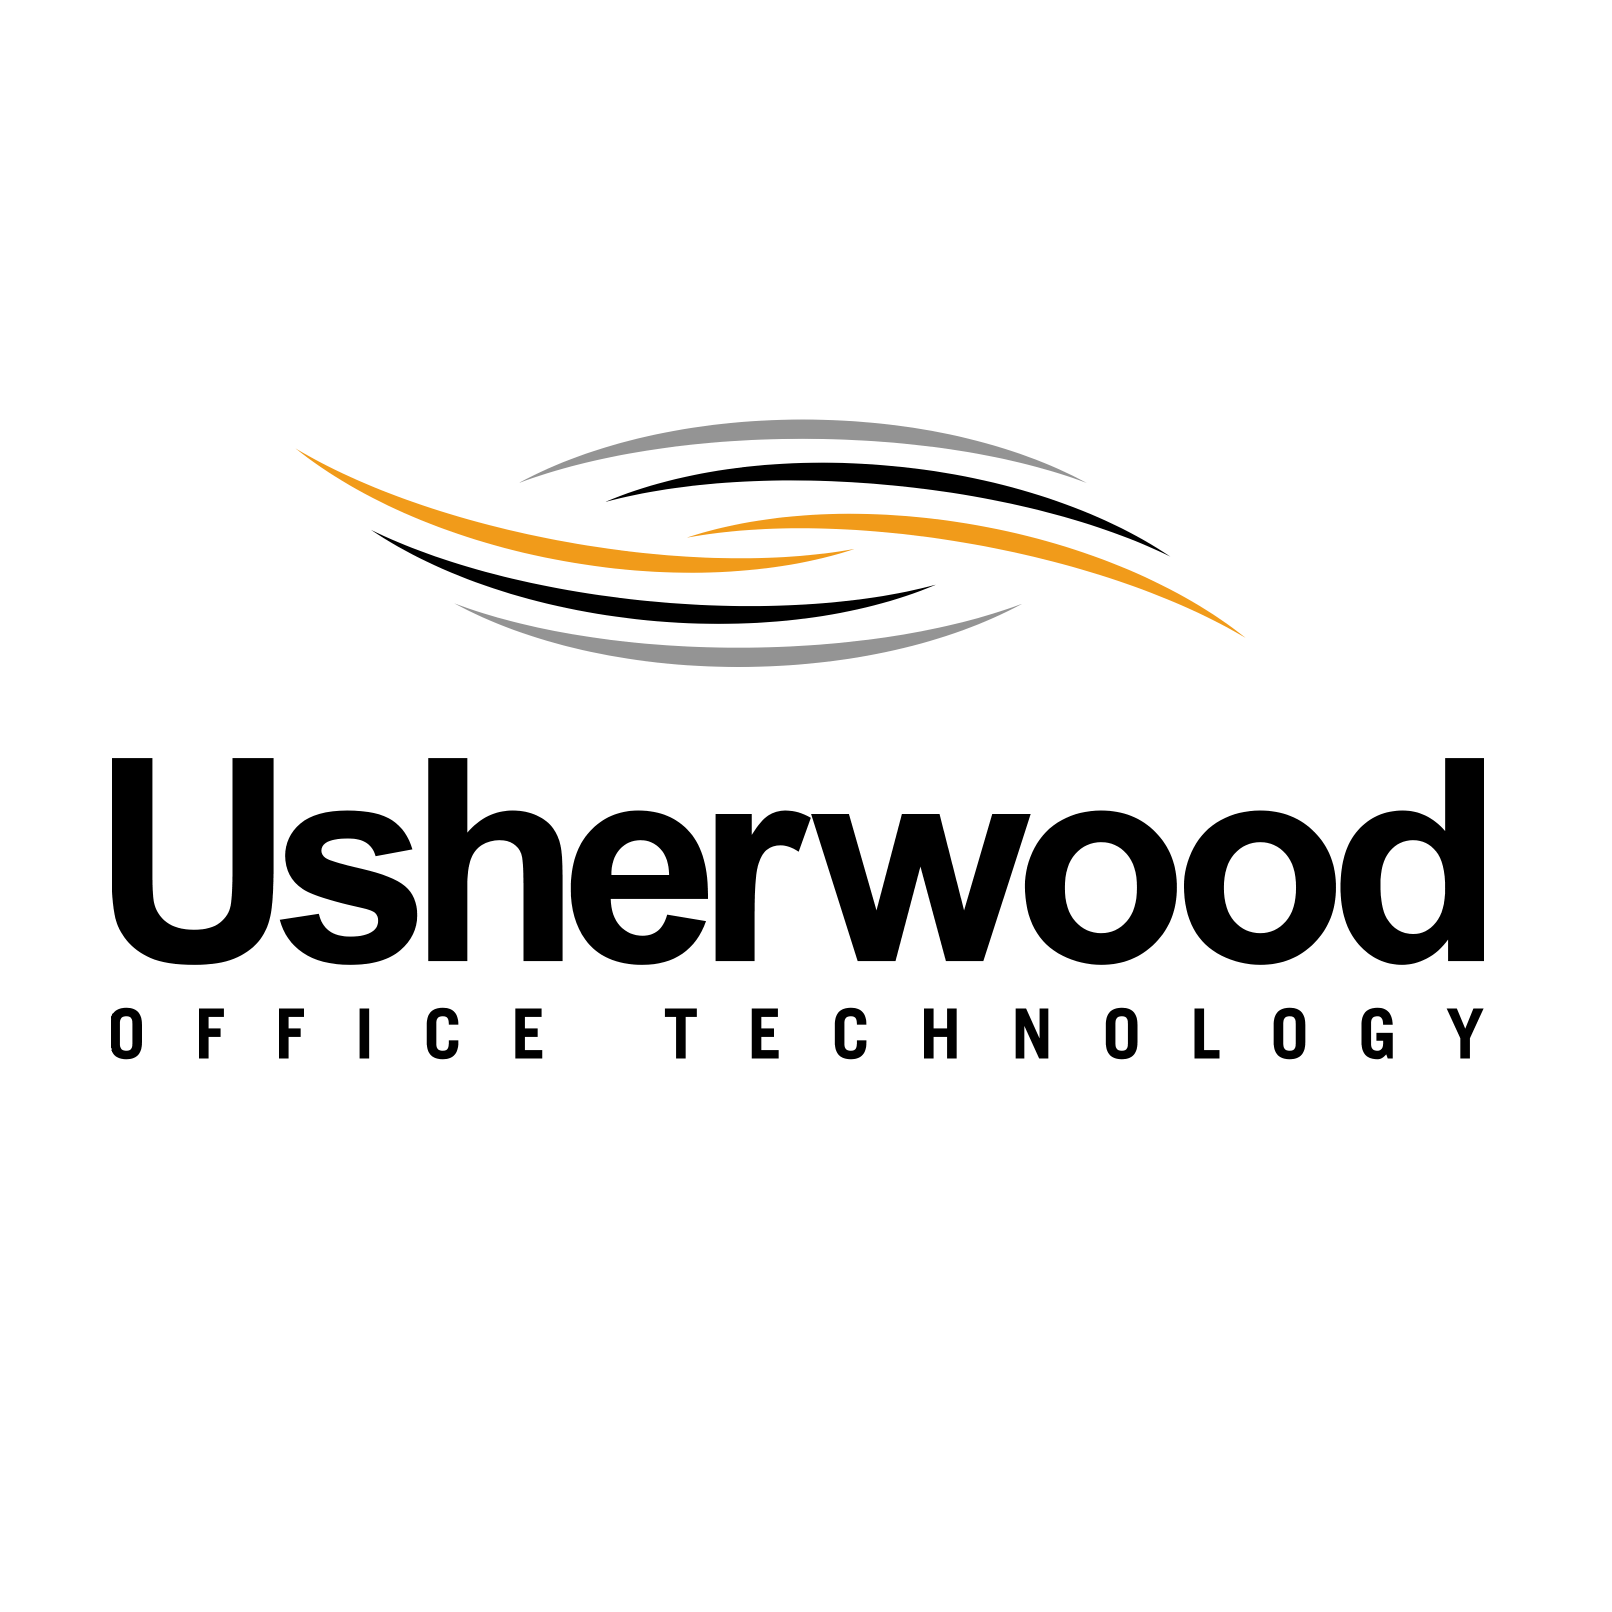 Usherwood Office Technology